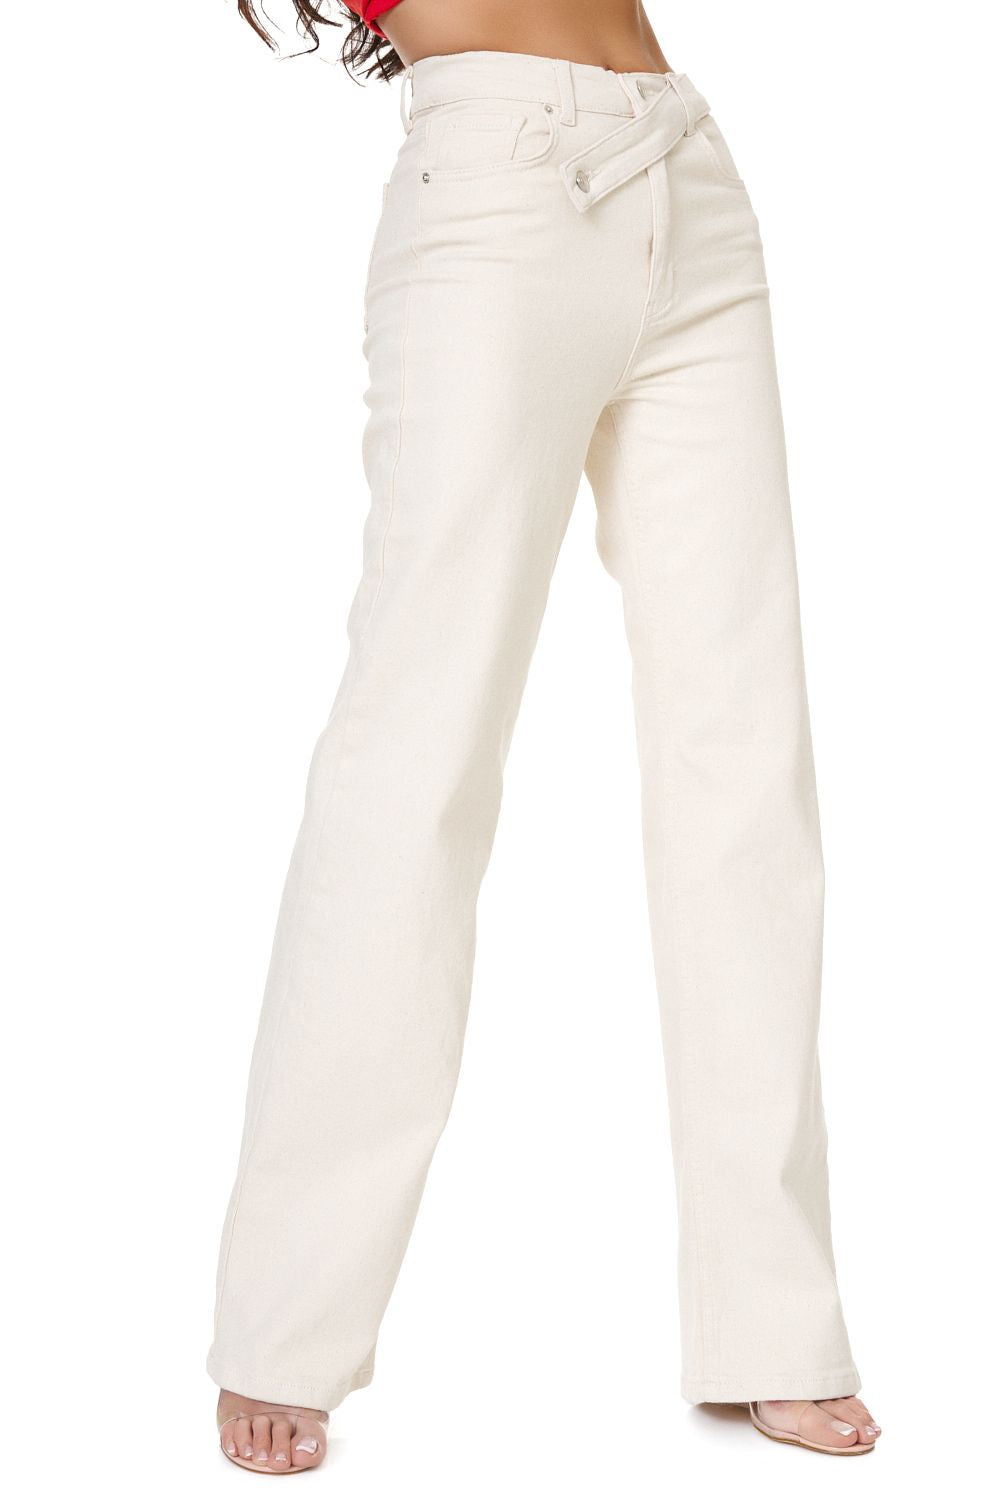 Castalina Bogas casual jeans beige